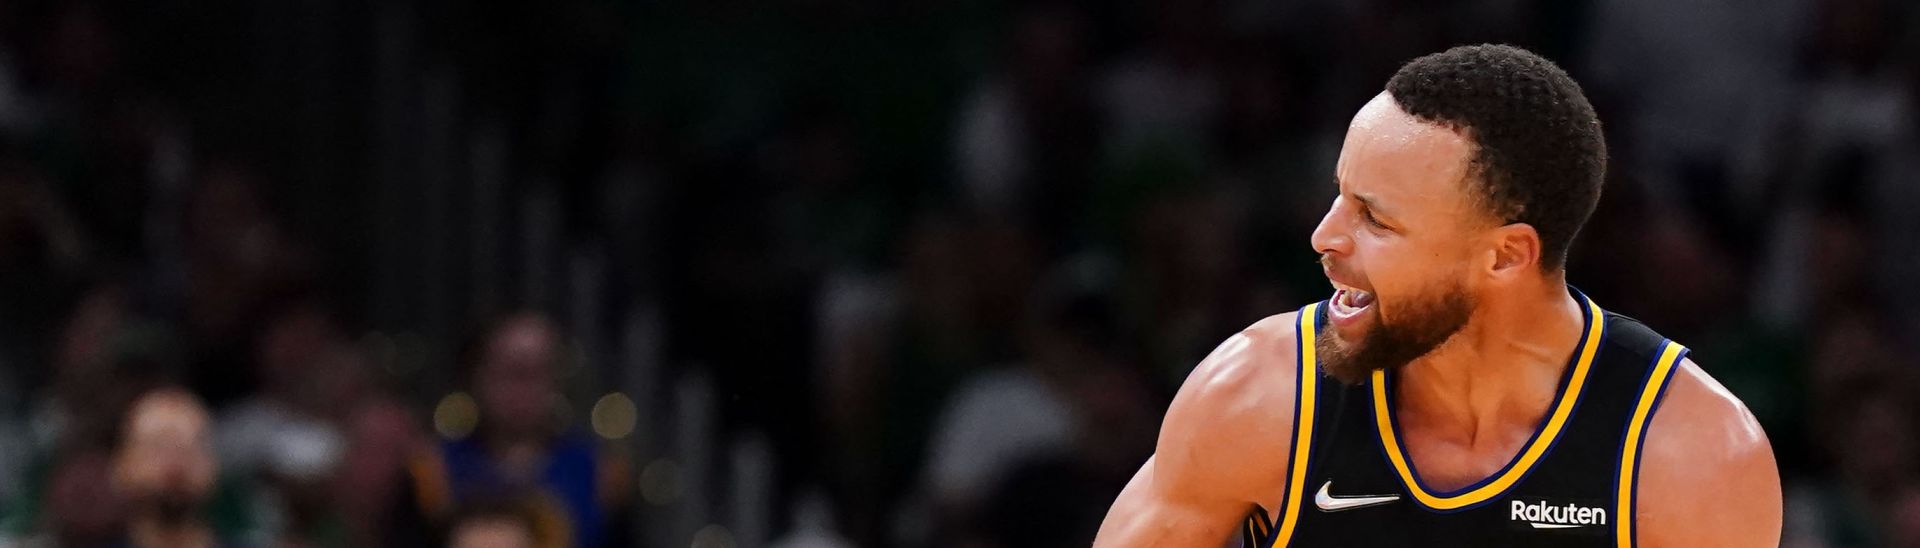 NBA Stephen Curry Hero